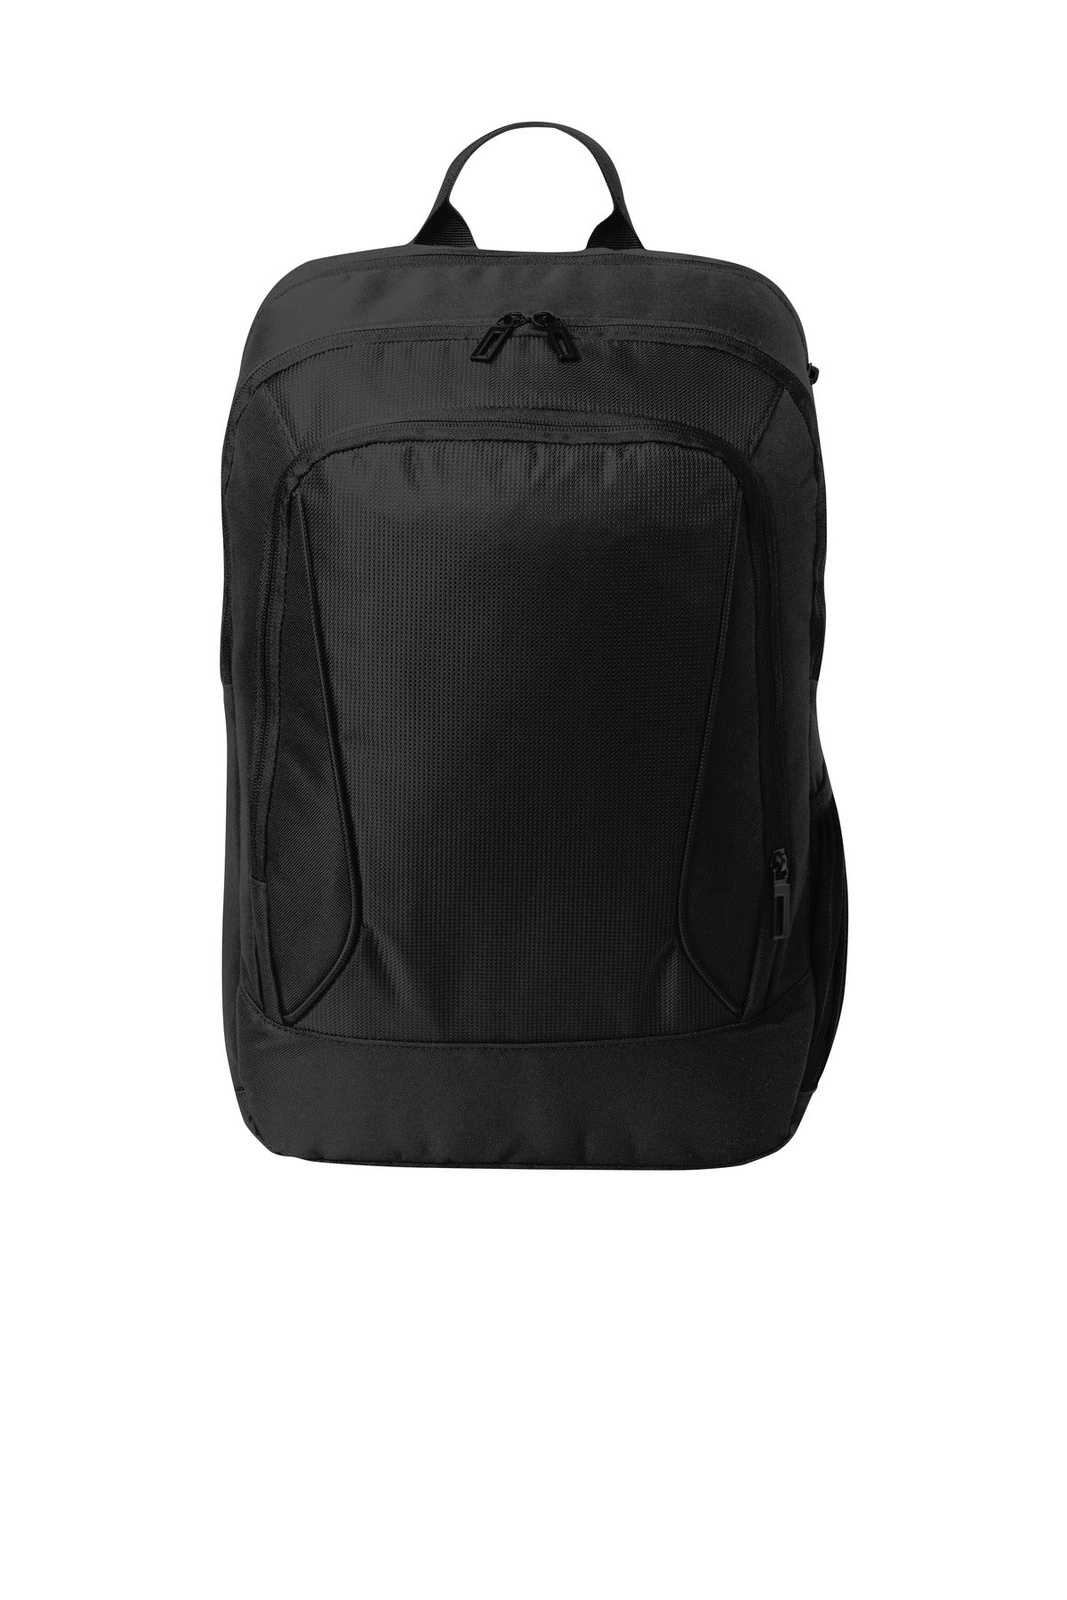 Port Authority BG222 City Backpack - Black - HIT a Double - 1